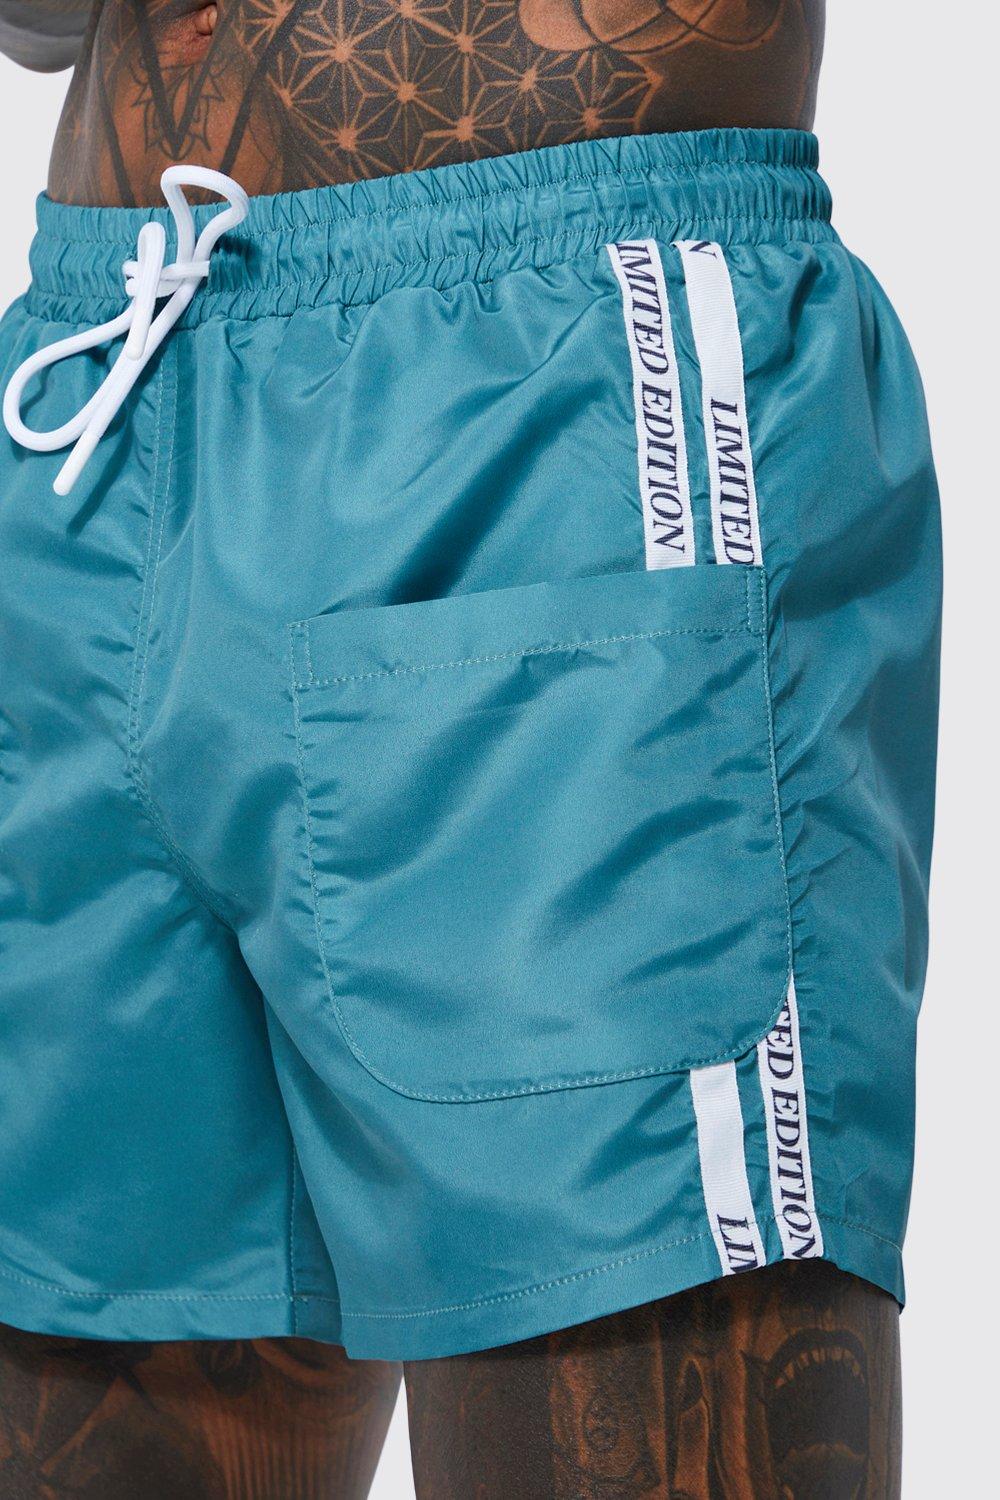 Calvin Klein medium length swim shorts in blue